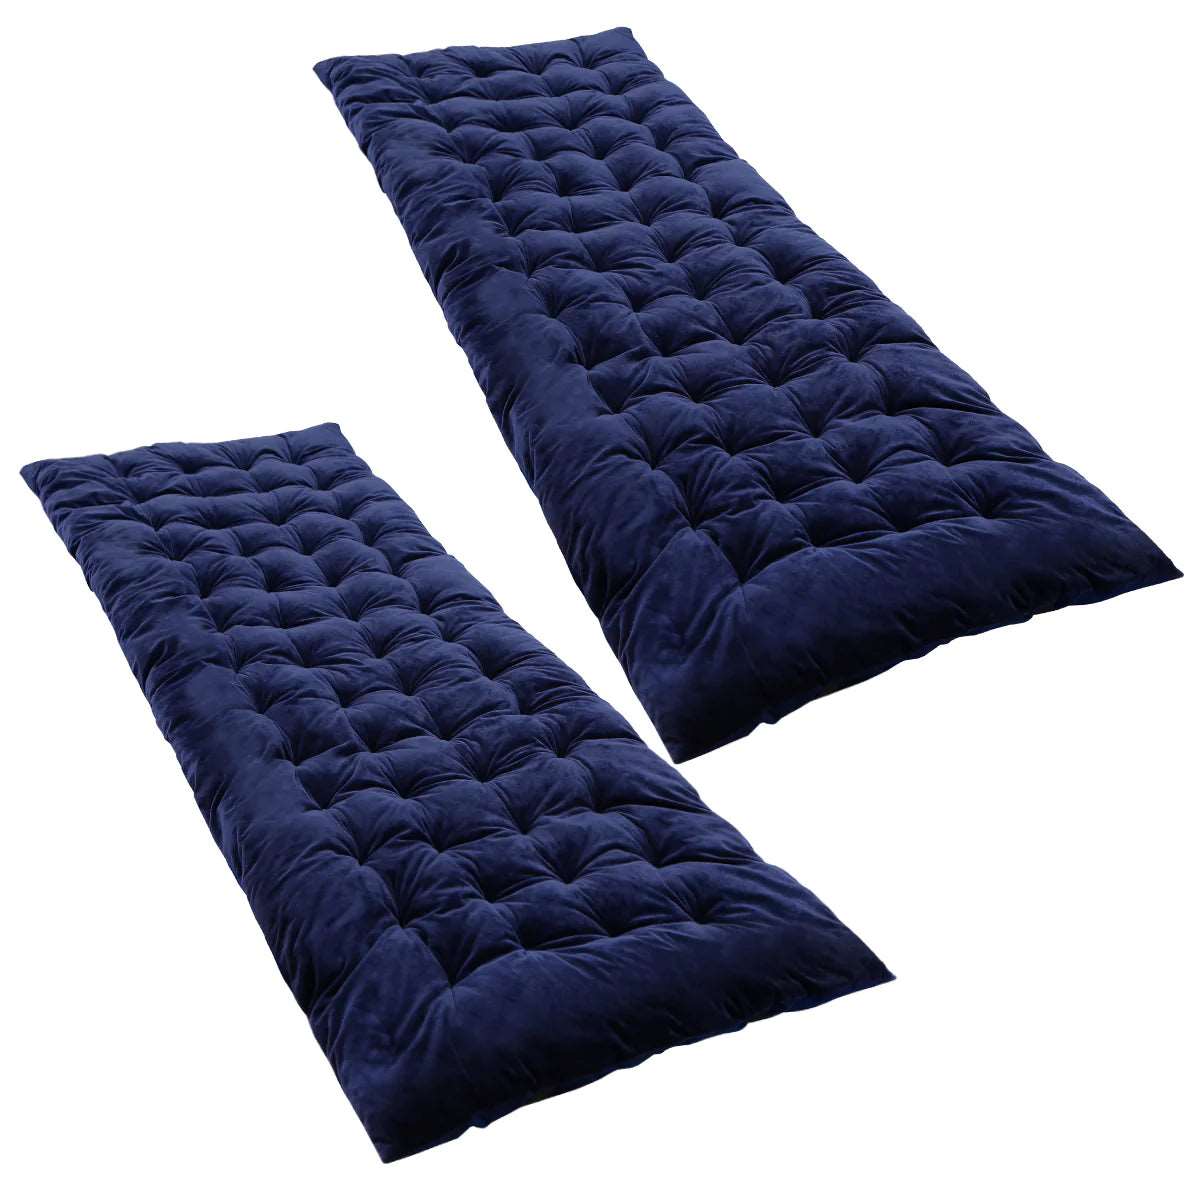 Soft Comfortable Cotton Sleeping Cot Mattress